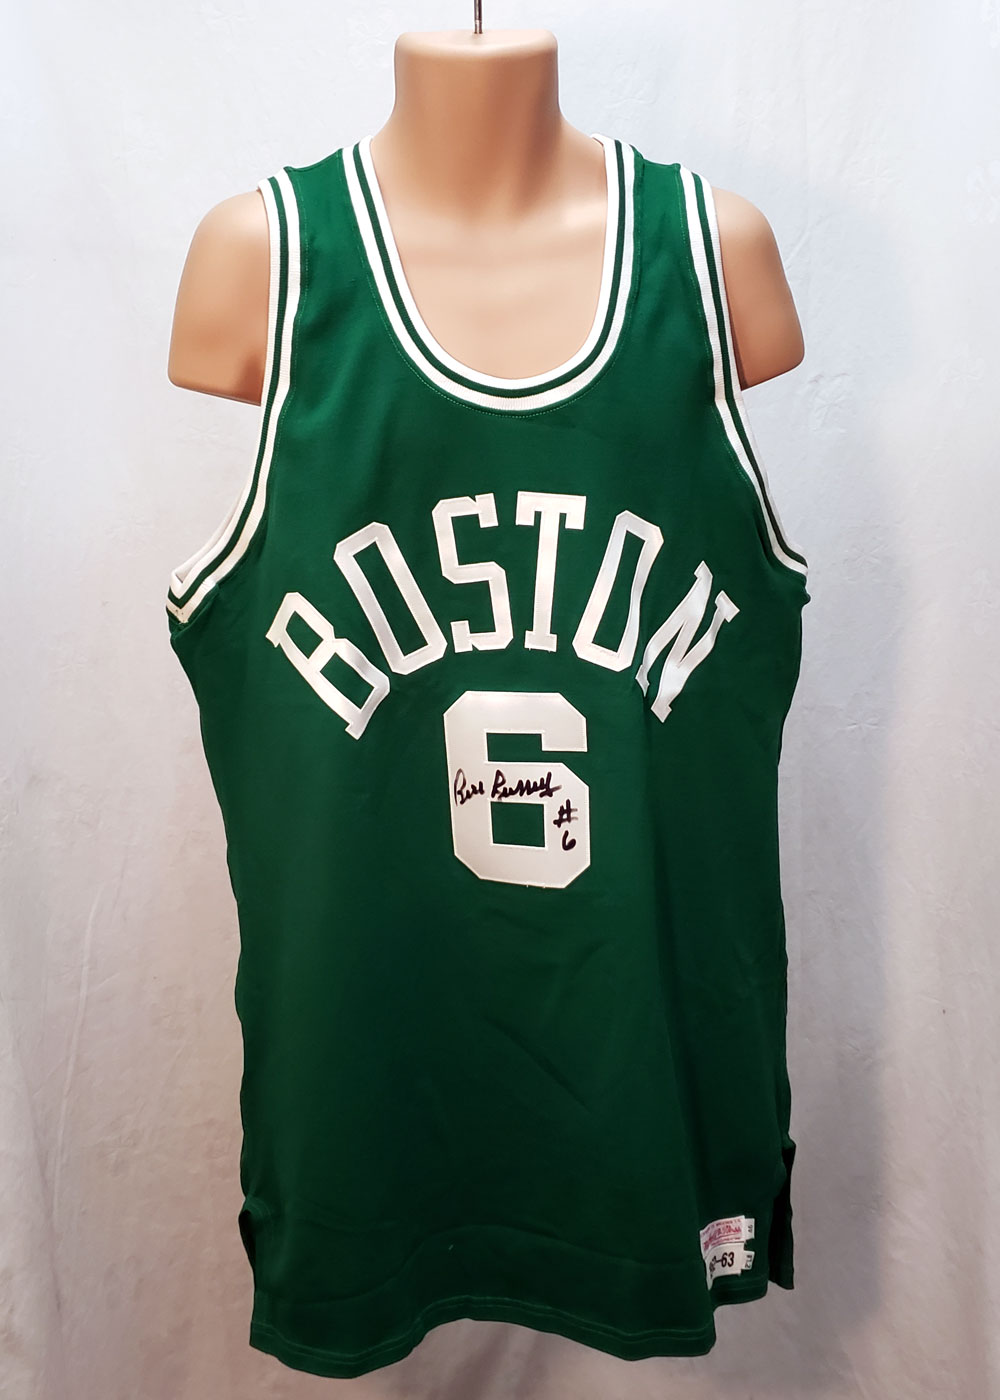 Bill Russell Boston Celtics Autographed Framed Basketball Jersey